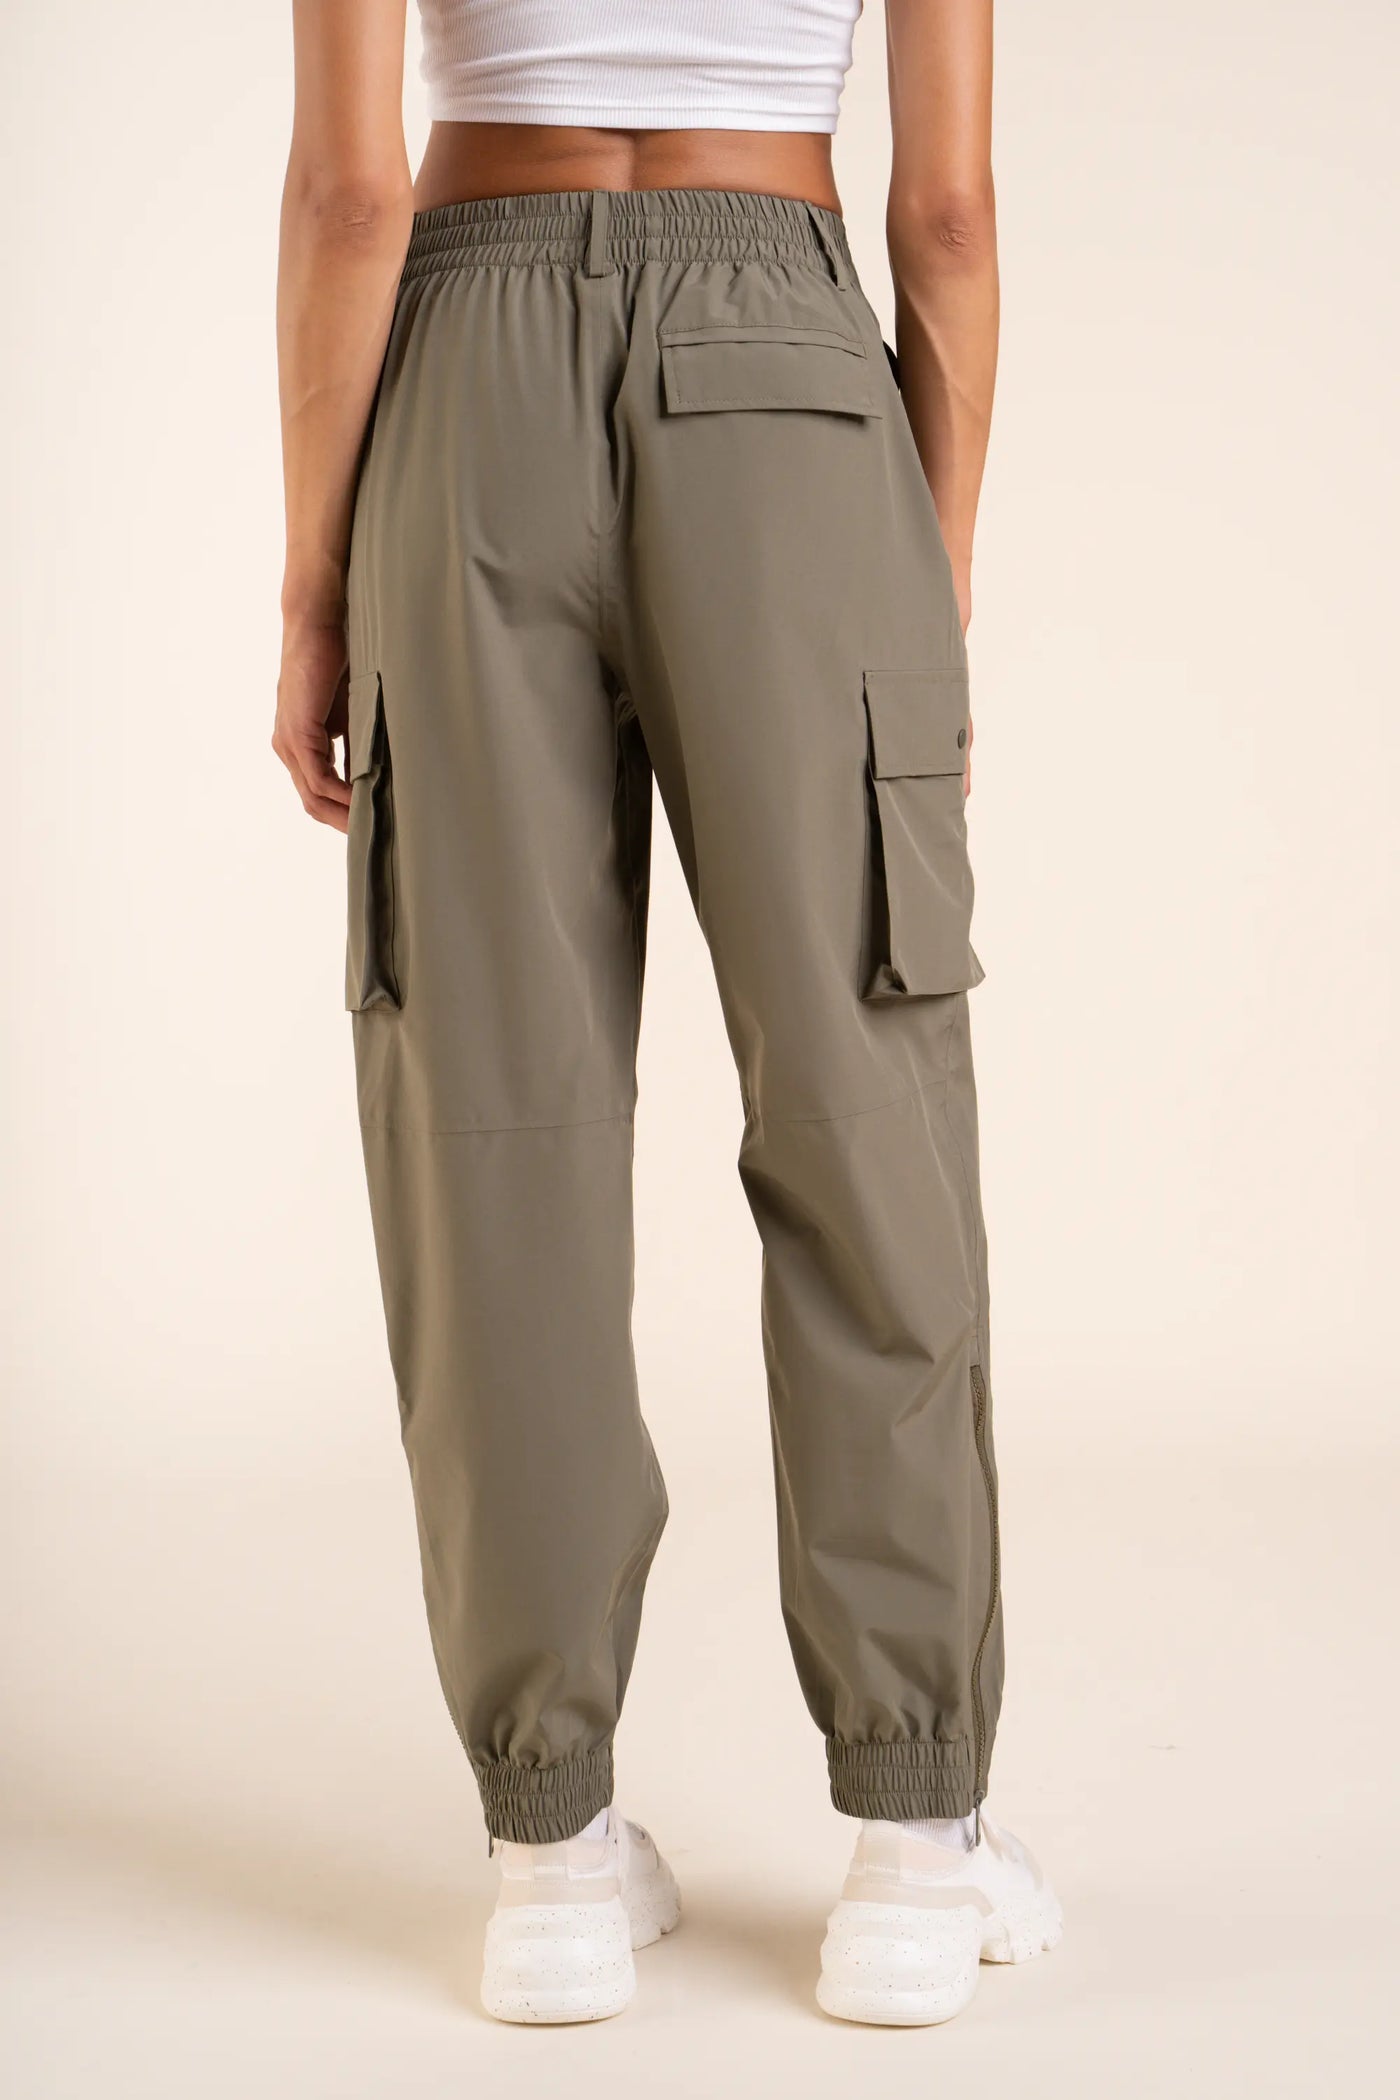 Pantalon imperméable Gambetta cargo multipoches #couleur_kaki